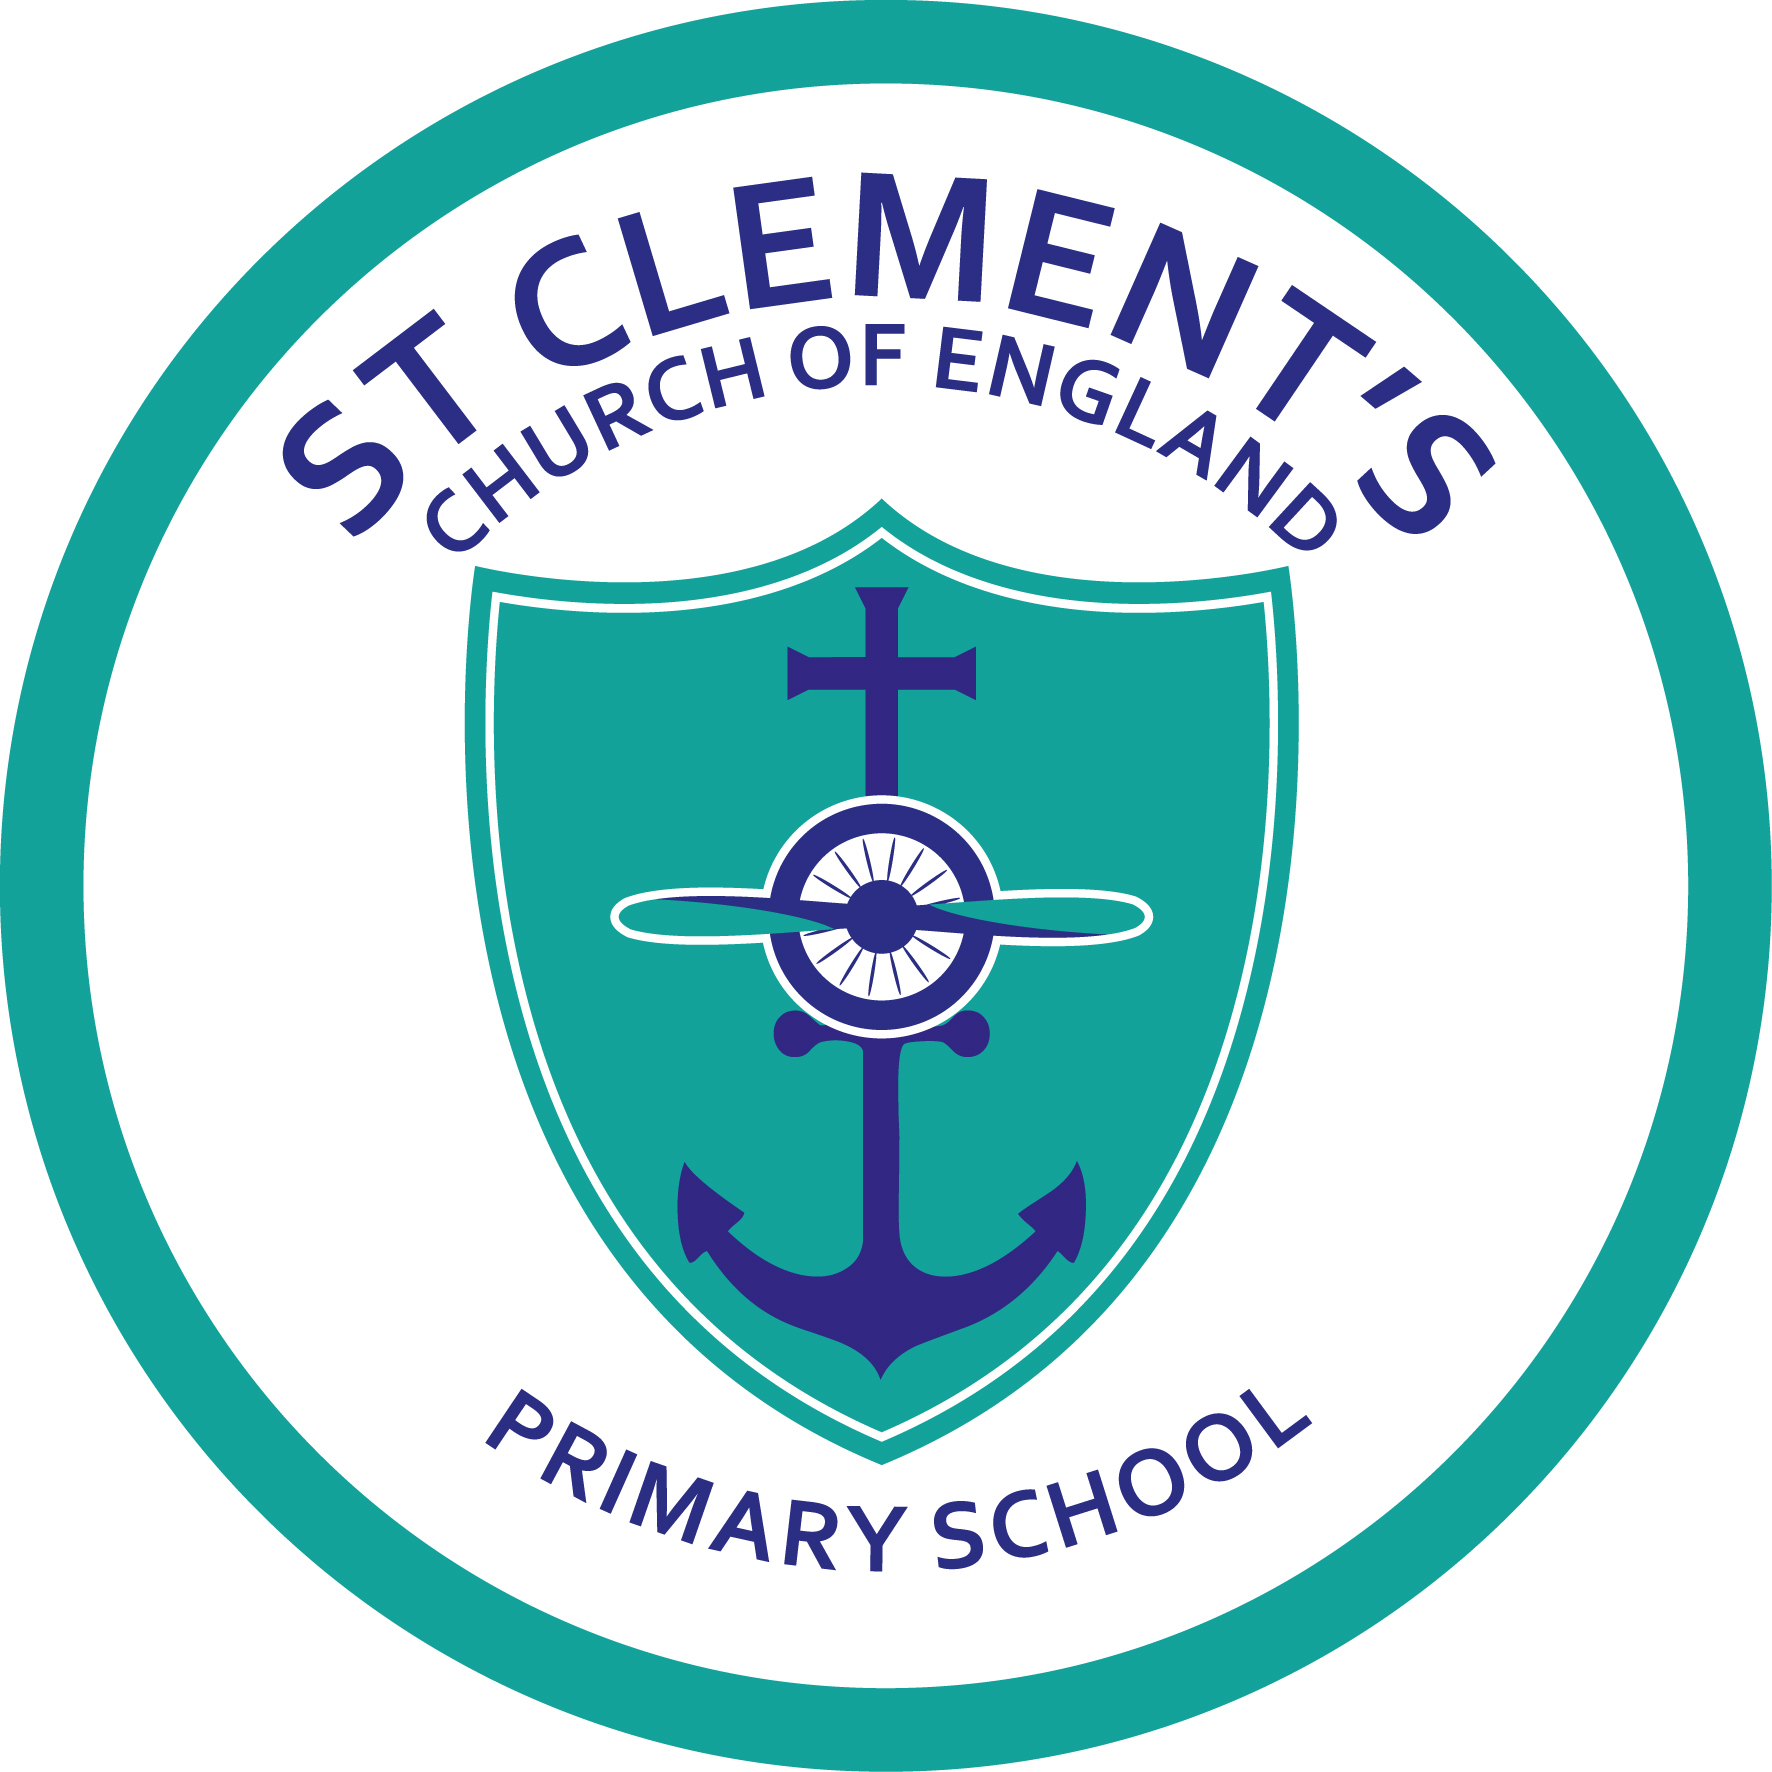 St Clement's CE Primary School